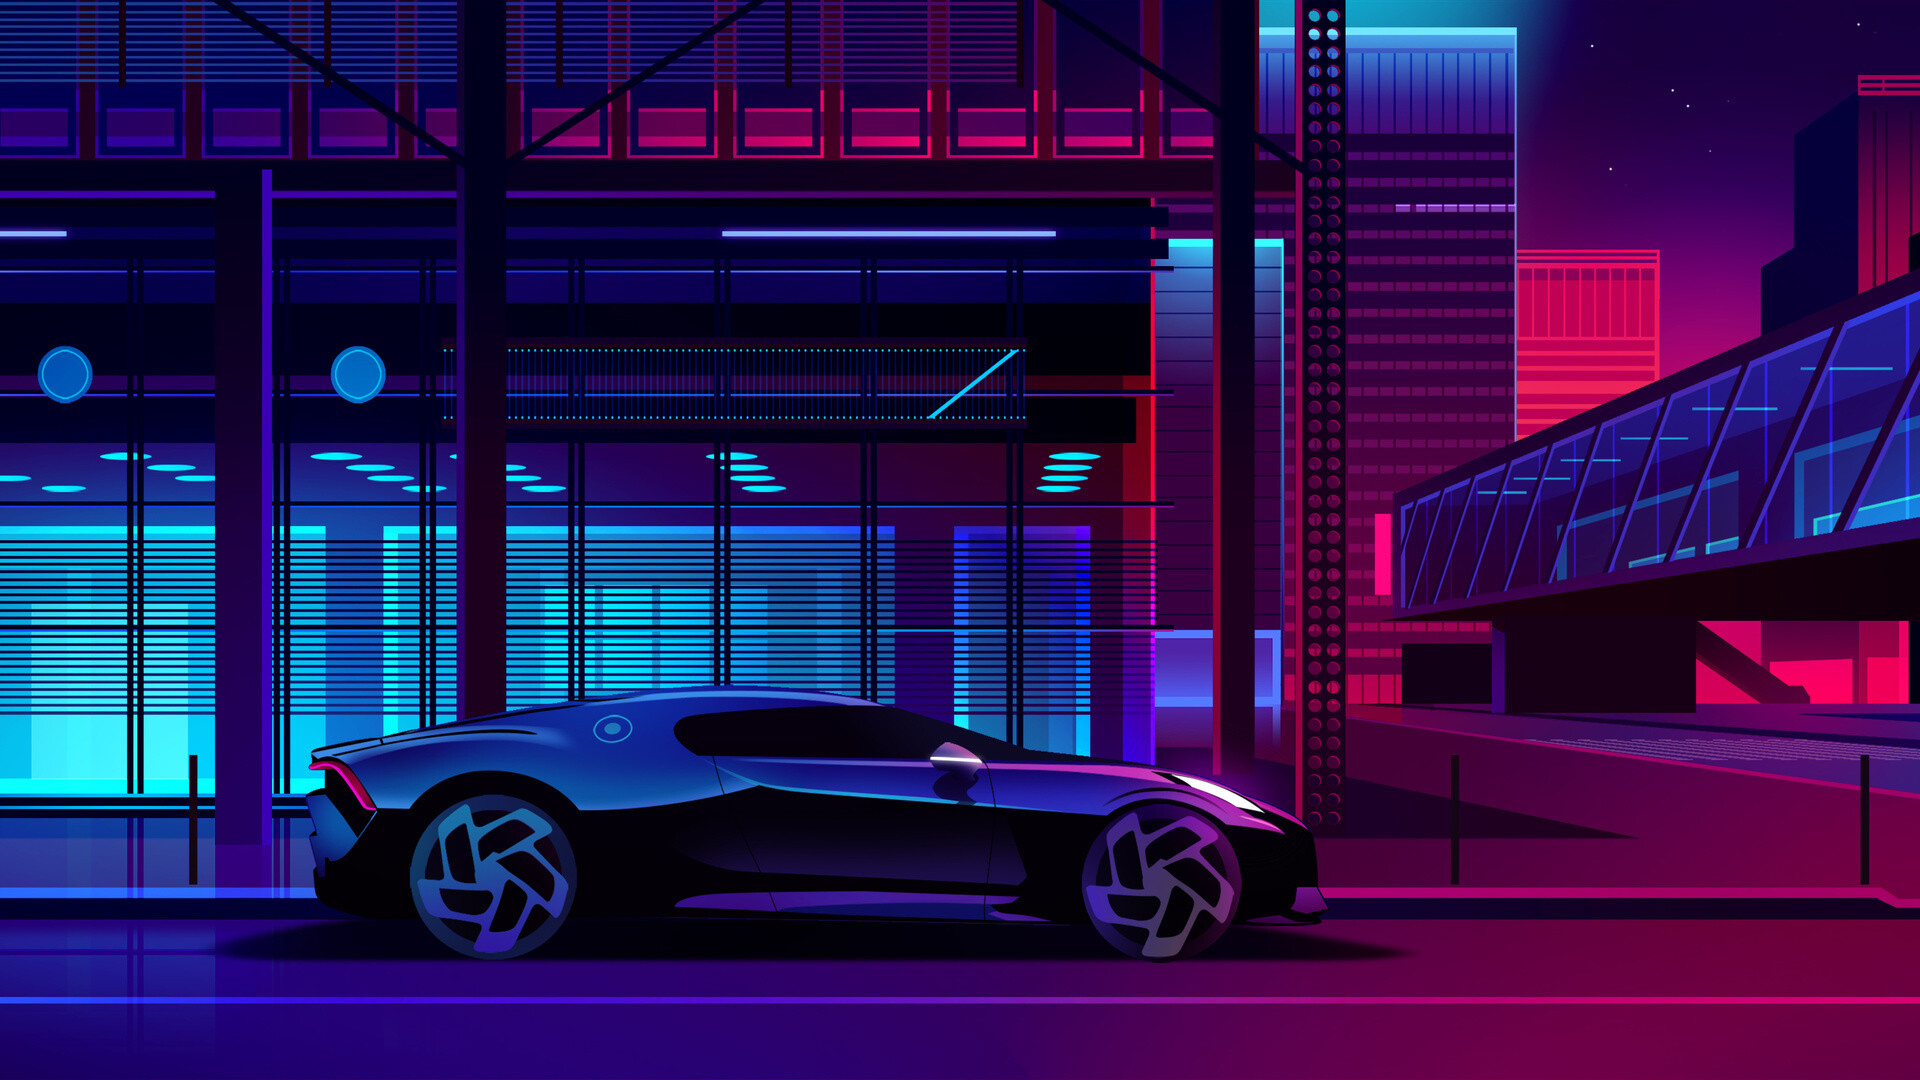 Bugatti La Voiture Noire: Neon KDE Plasma Art, A French Luxury Hypercar, Car. 1920x1080 Full HD Wallpaper.